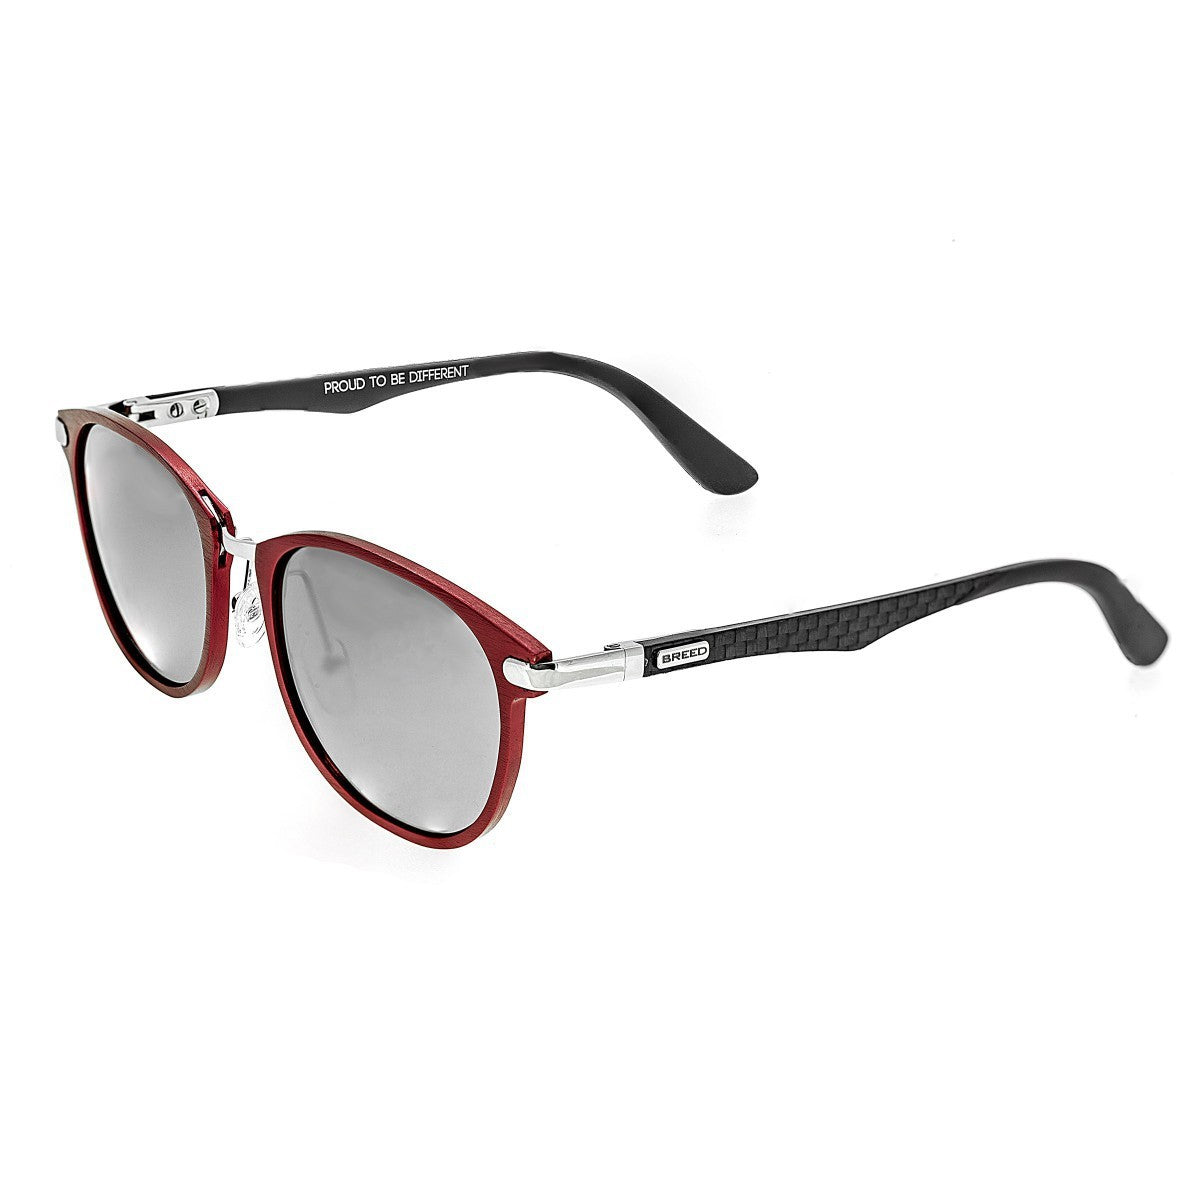 Breed Cetus Aluminium and Carbon Fiber Polarized Sunglasses - Red/Silver - BSG027RD